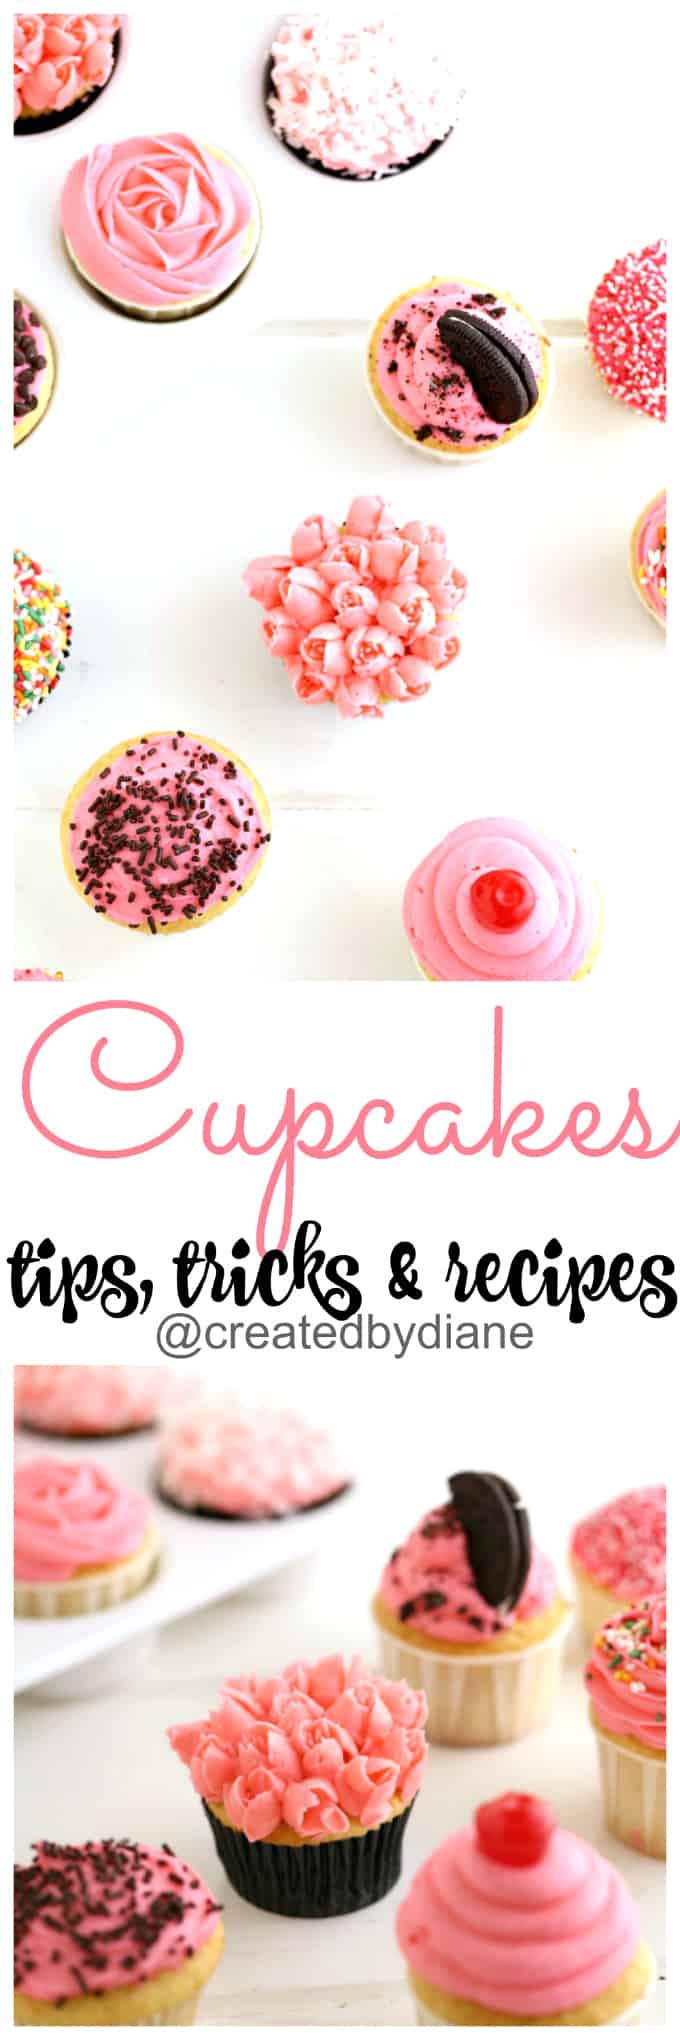 Cupcakes, tips, tricks, recipes #cupcake #frosting #sprinkles #decorating